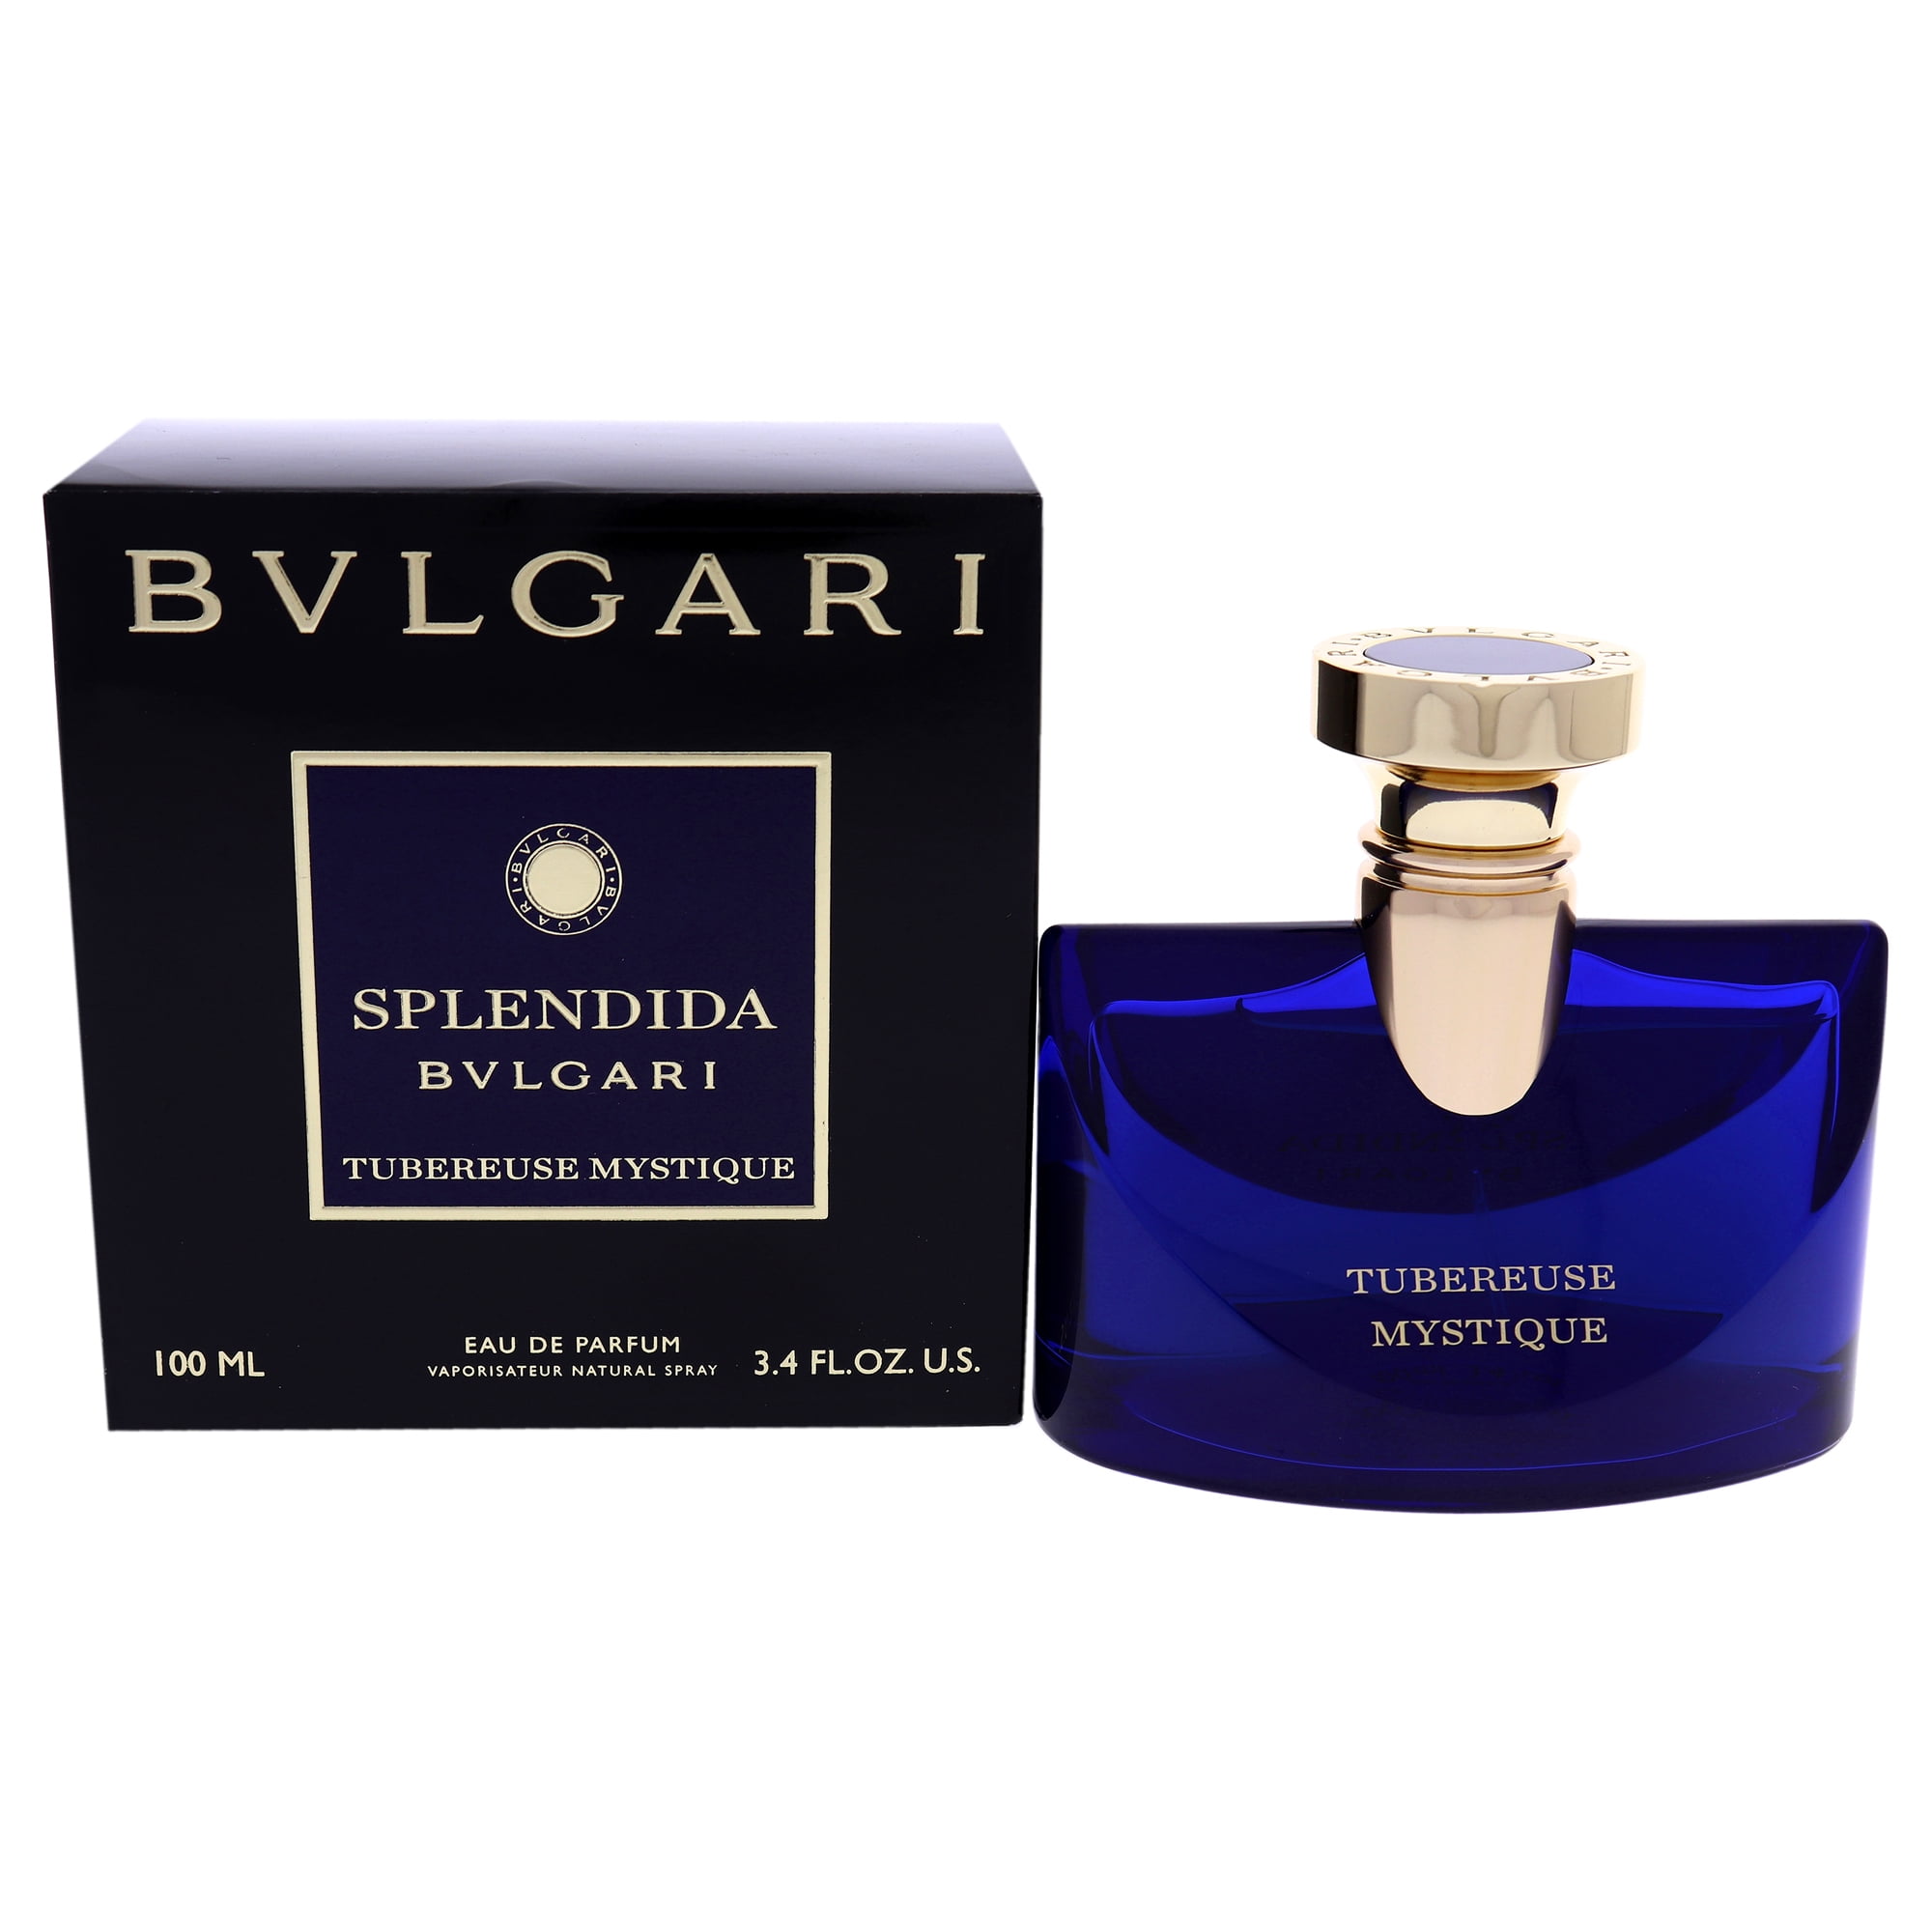 bvlgari perfume splendida tubereuse mystique